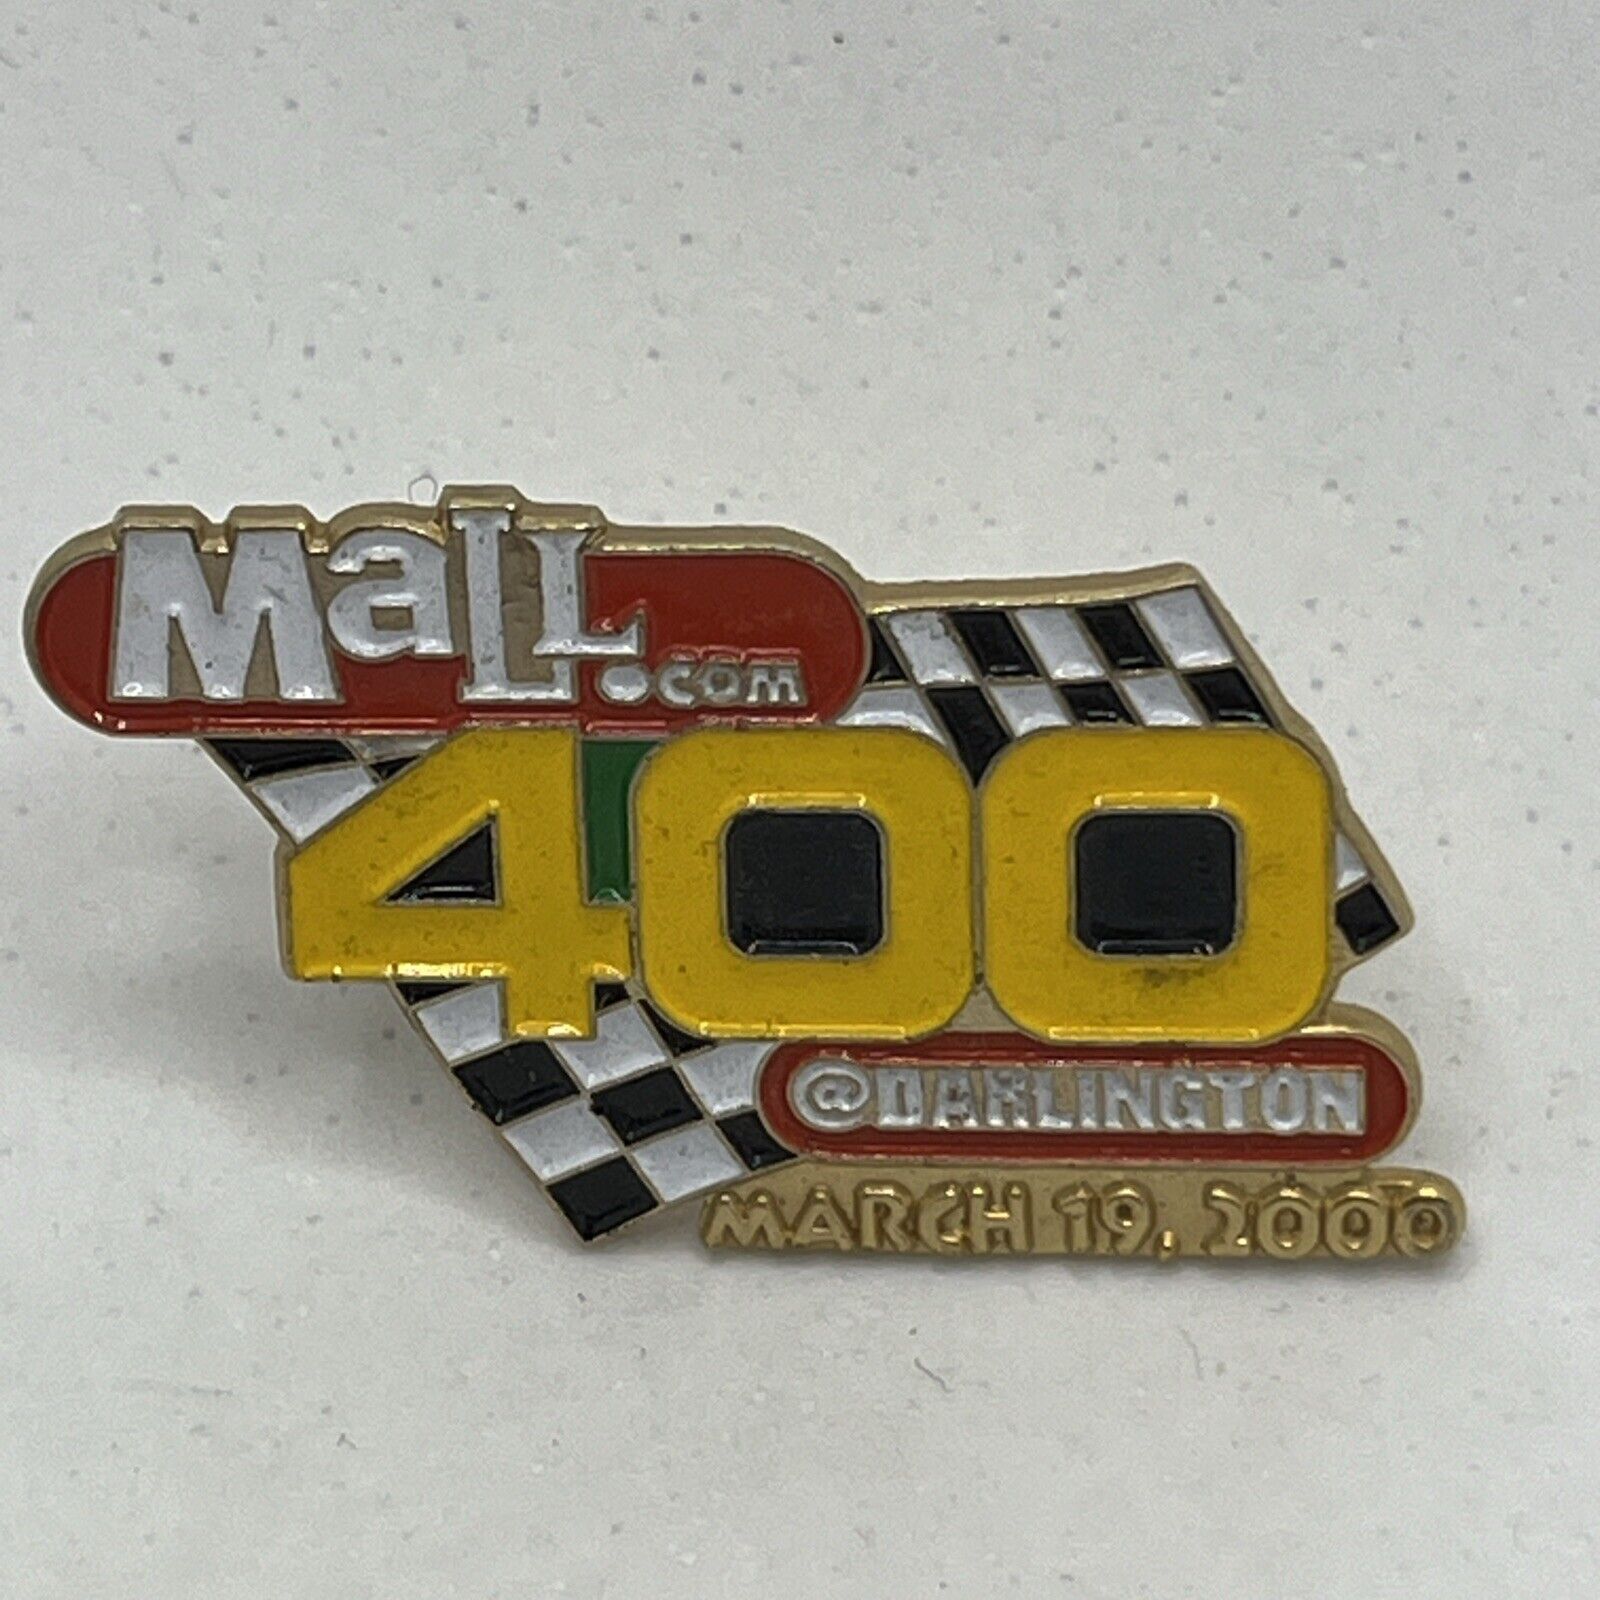 2000 Mall.com 400 Darlington Raceway Racing South Carolina Race Lapel Hat Pin